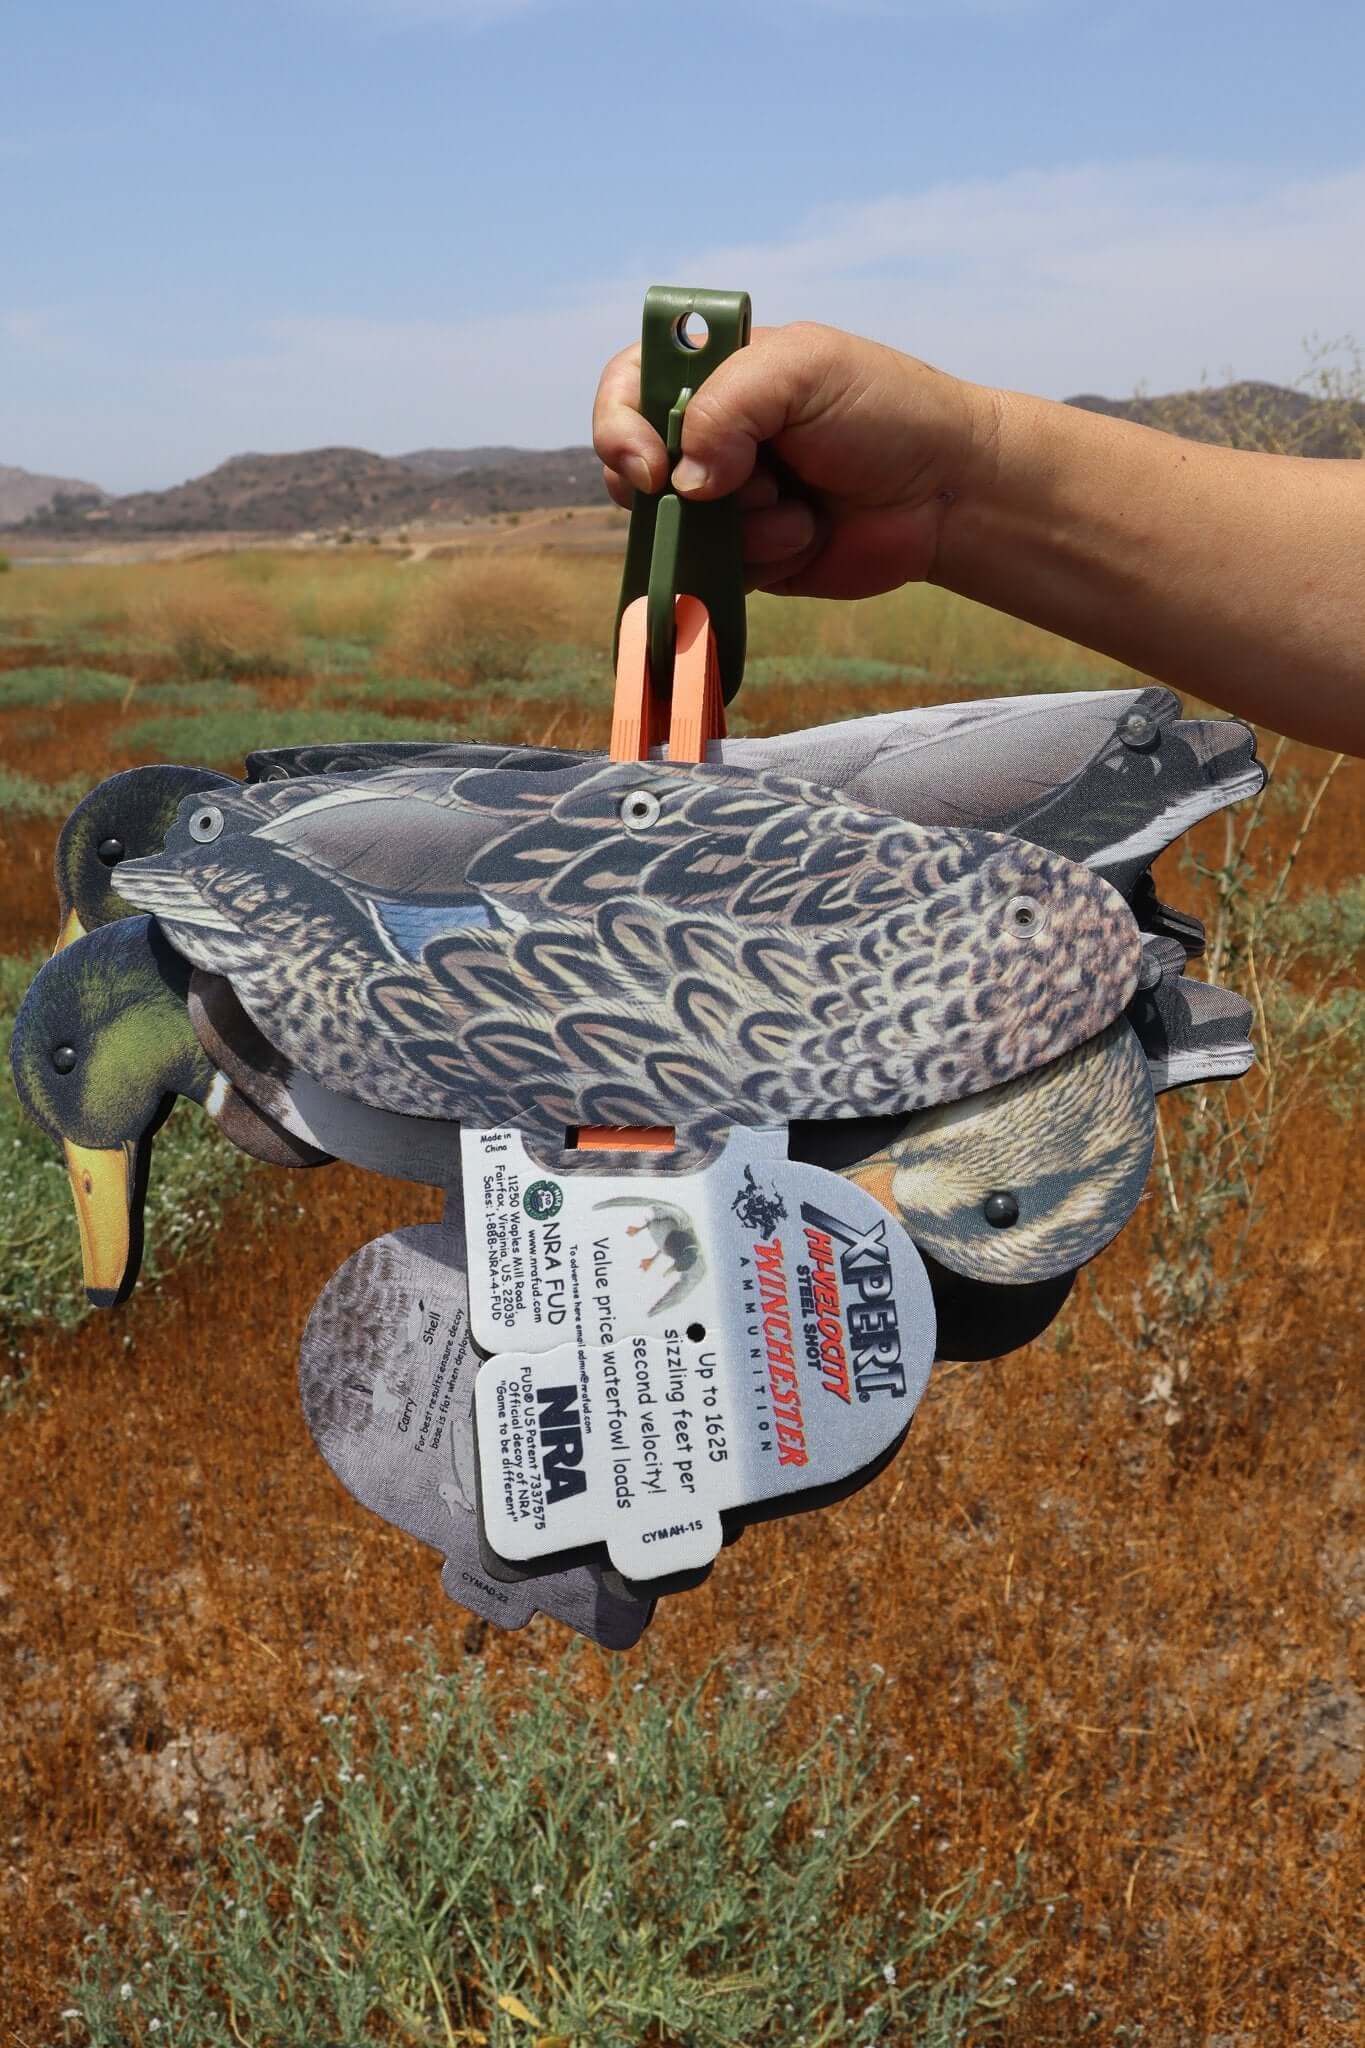 Ducks - Mallard Decoy – 6 Full Size Collapsible Mallard Decoys For Land And Water Use